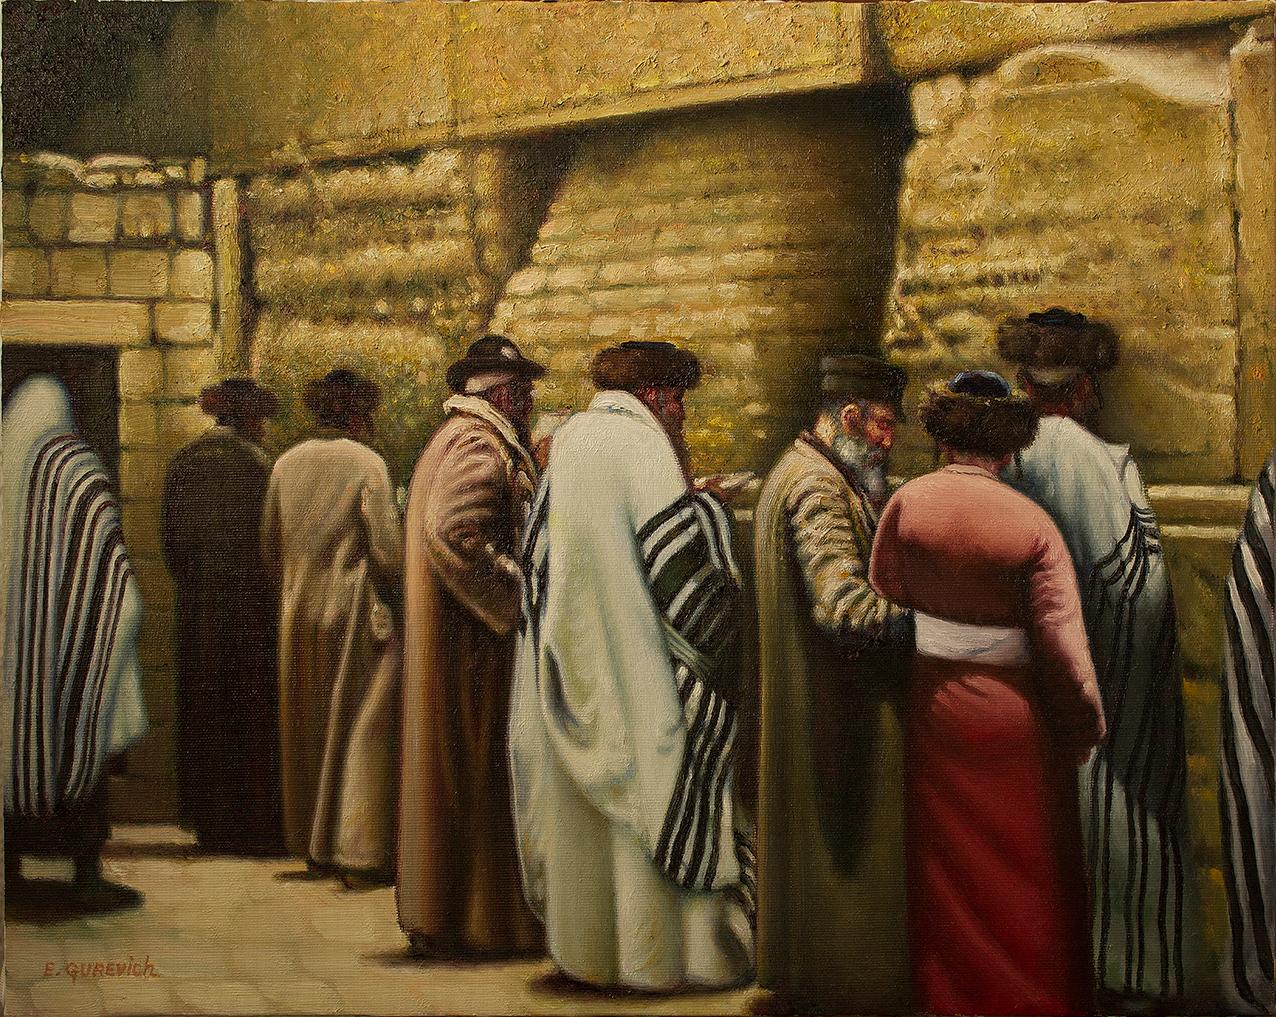 Eduard Gurevich Portrait Painting – Pilgrims at the Western Wall (Judaica)